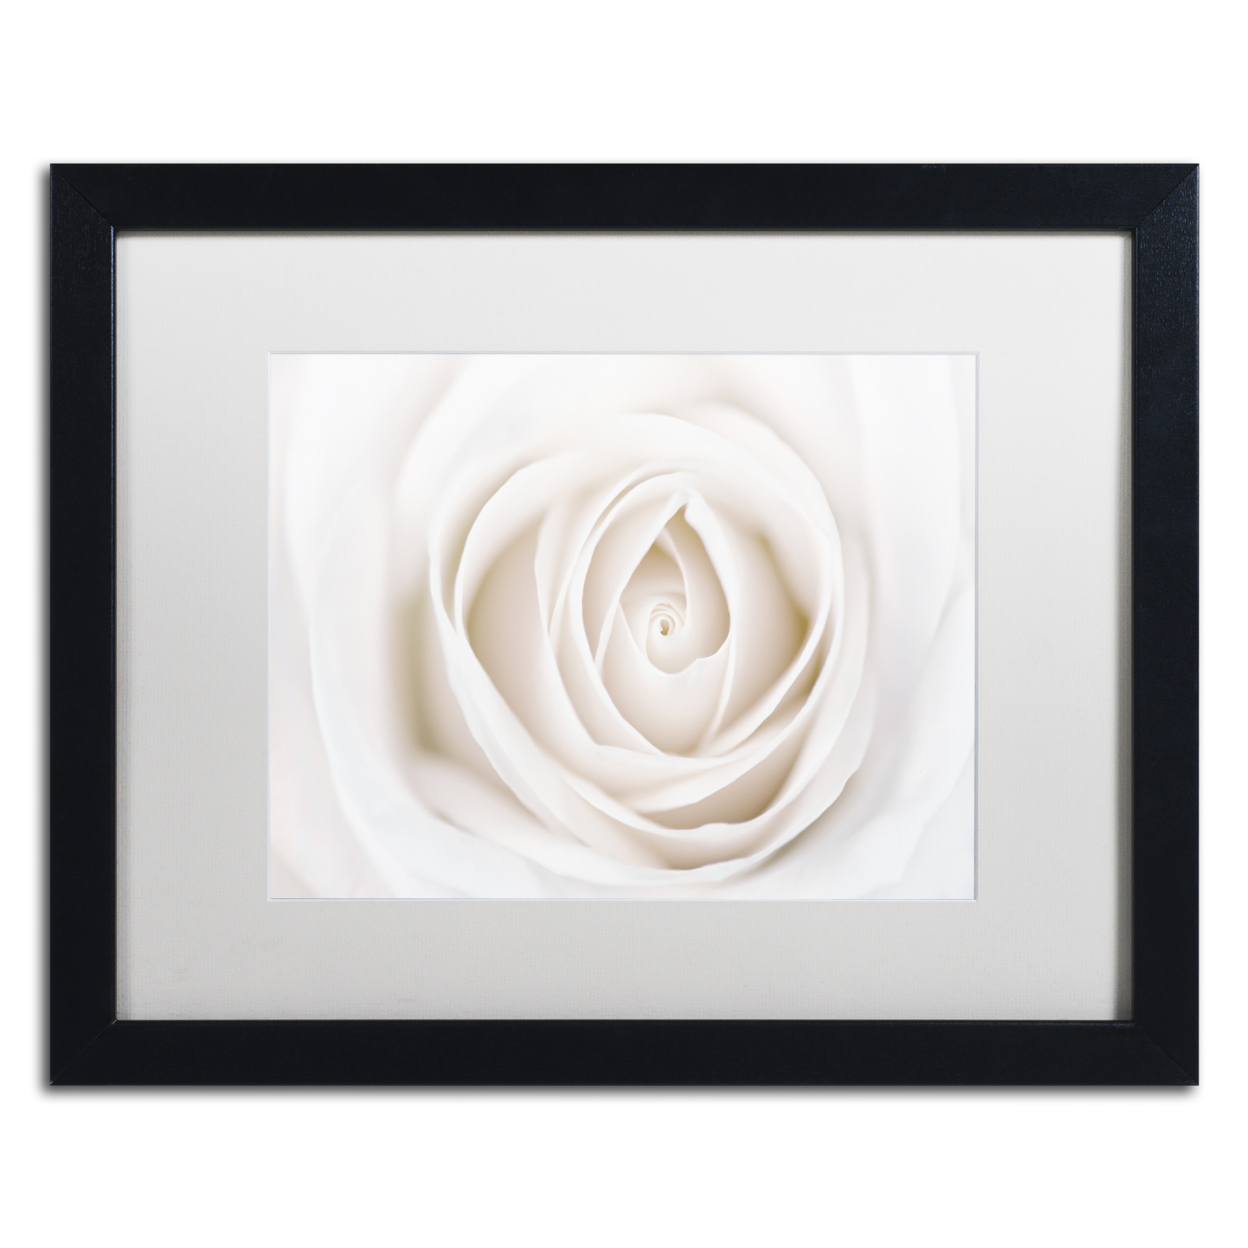 Cora Niele 'White Rose' Black Wooden Framed Art 18 X 22 Inches